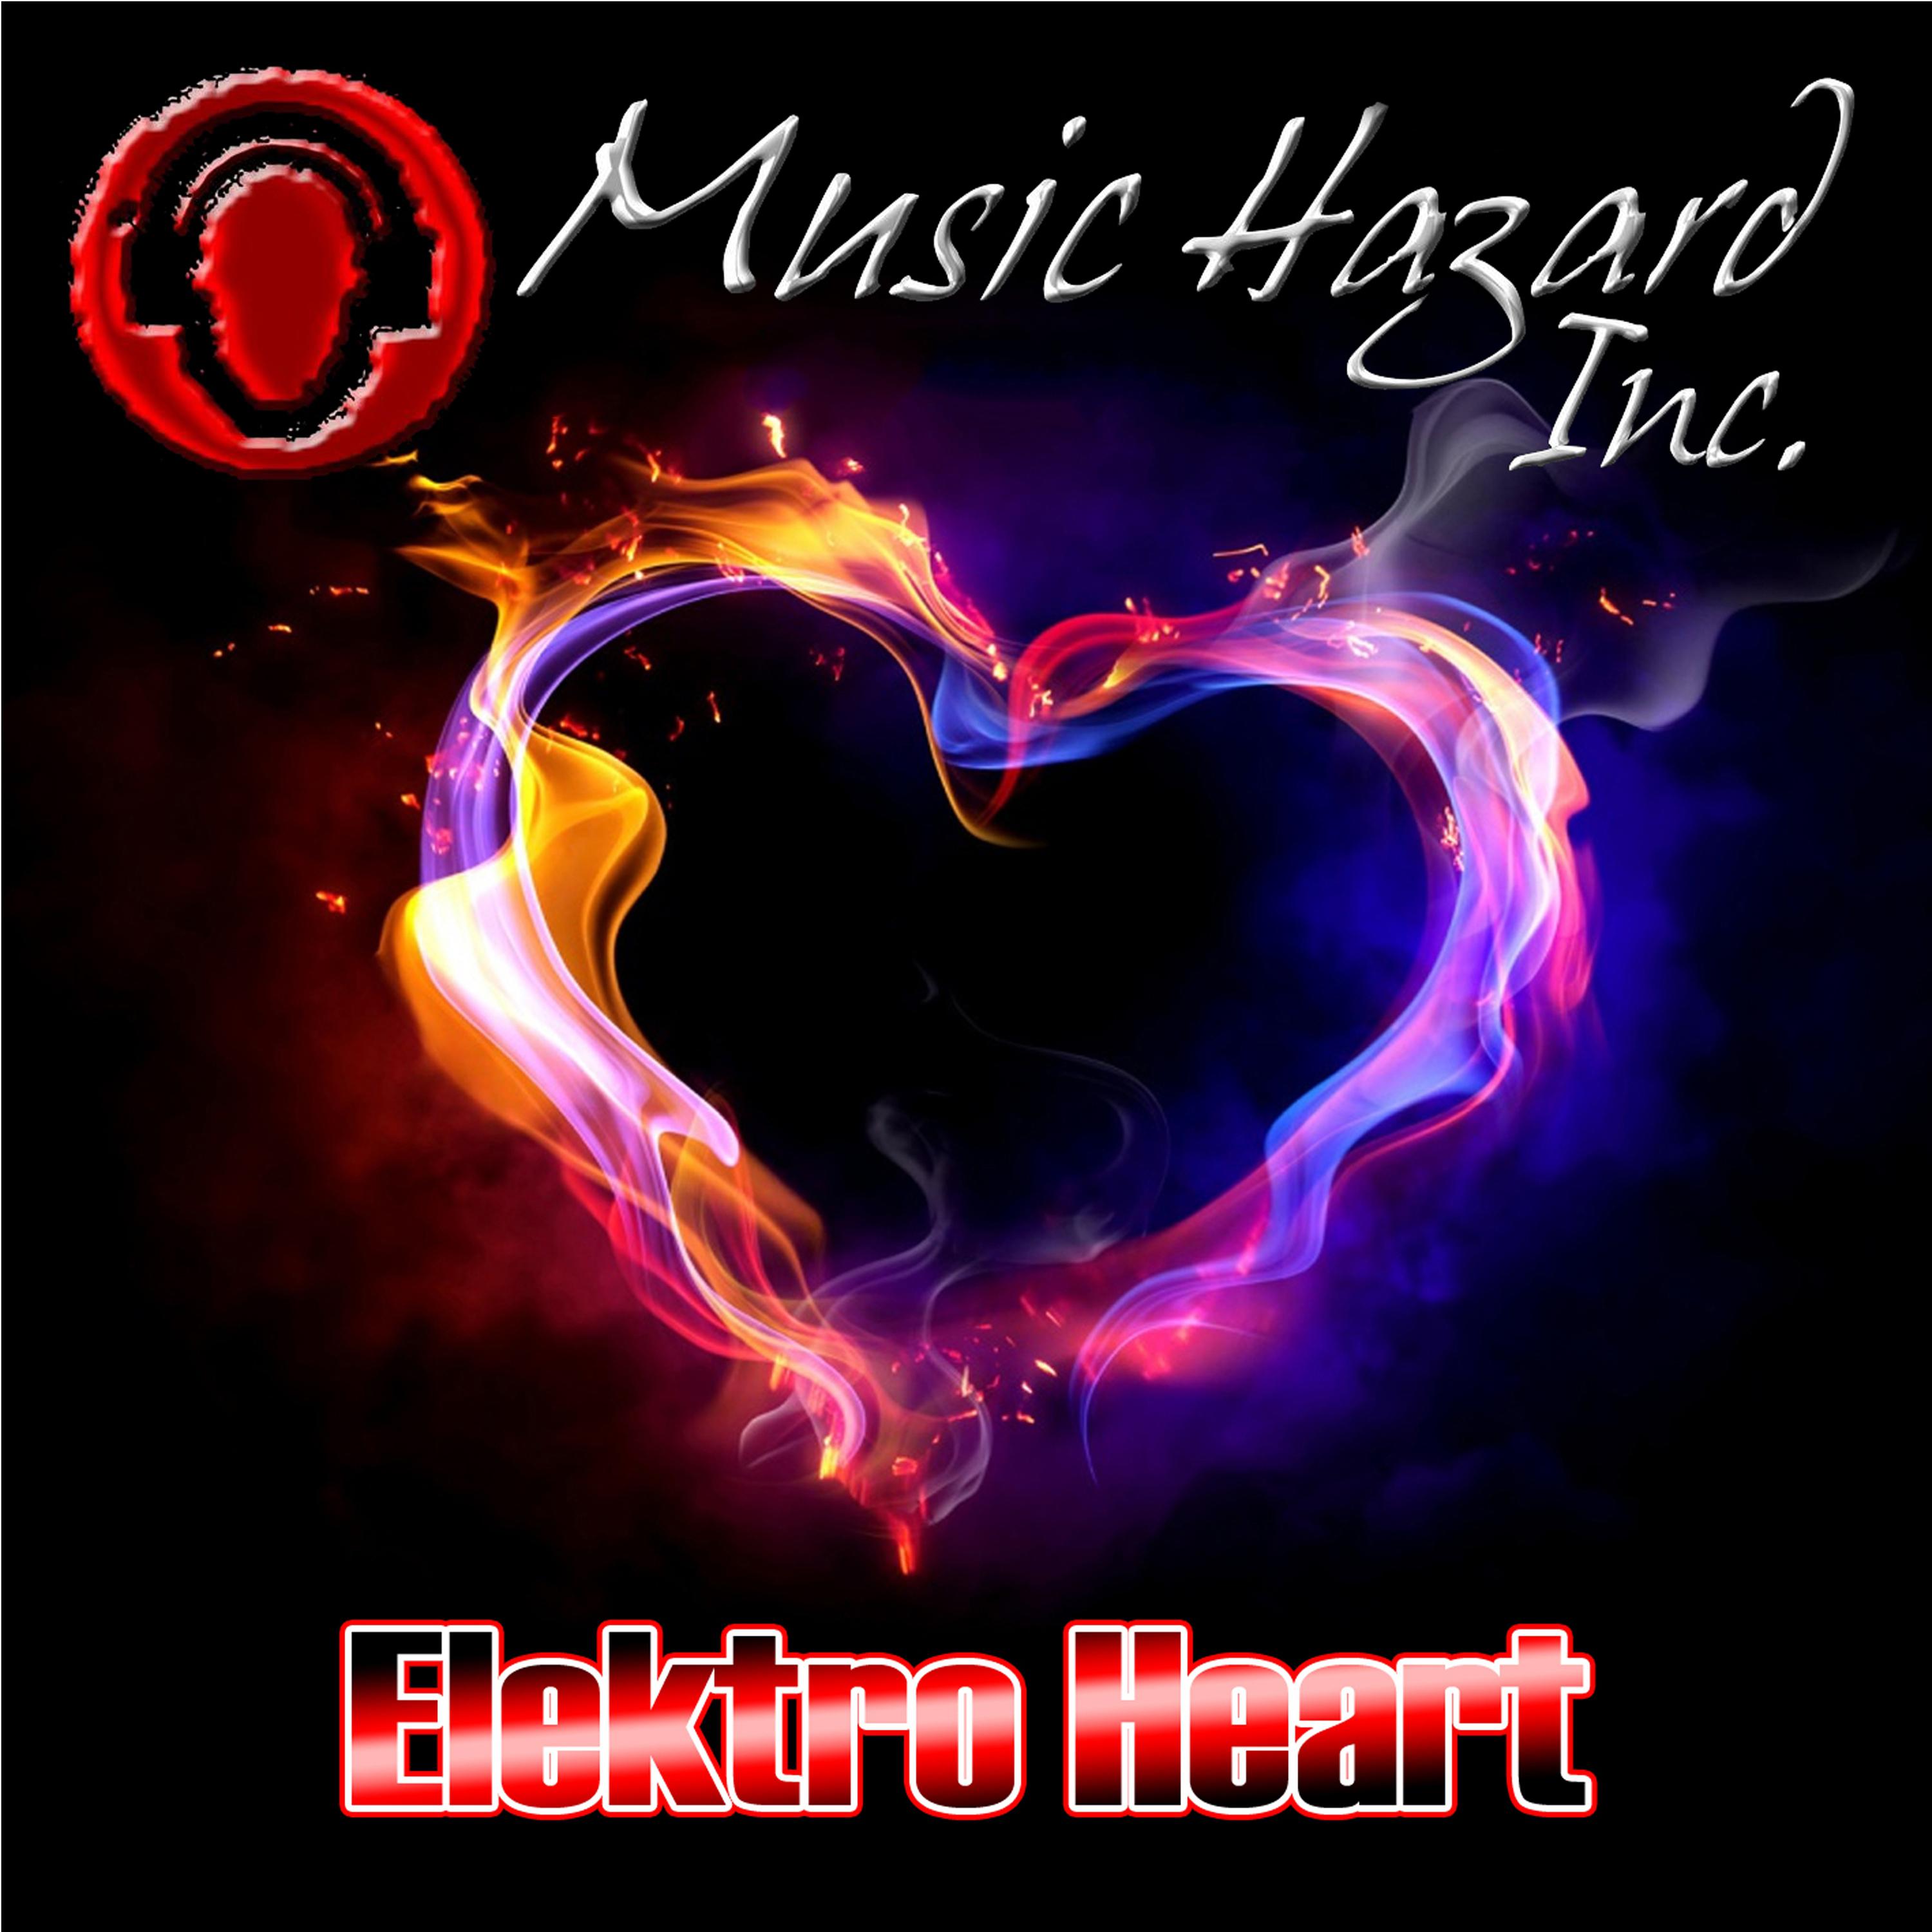 Music Hazard Inc. - Elektro Heart (Extended)